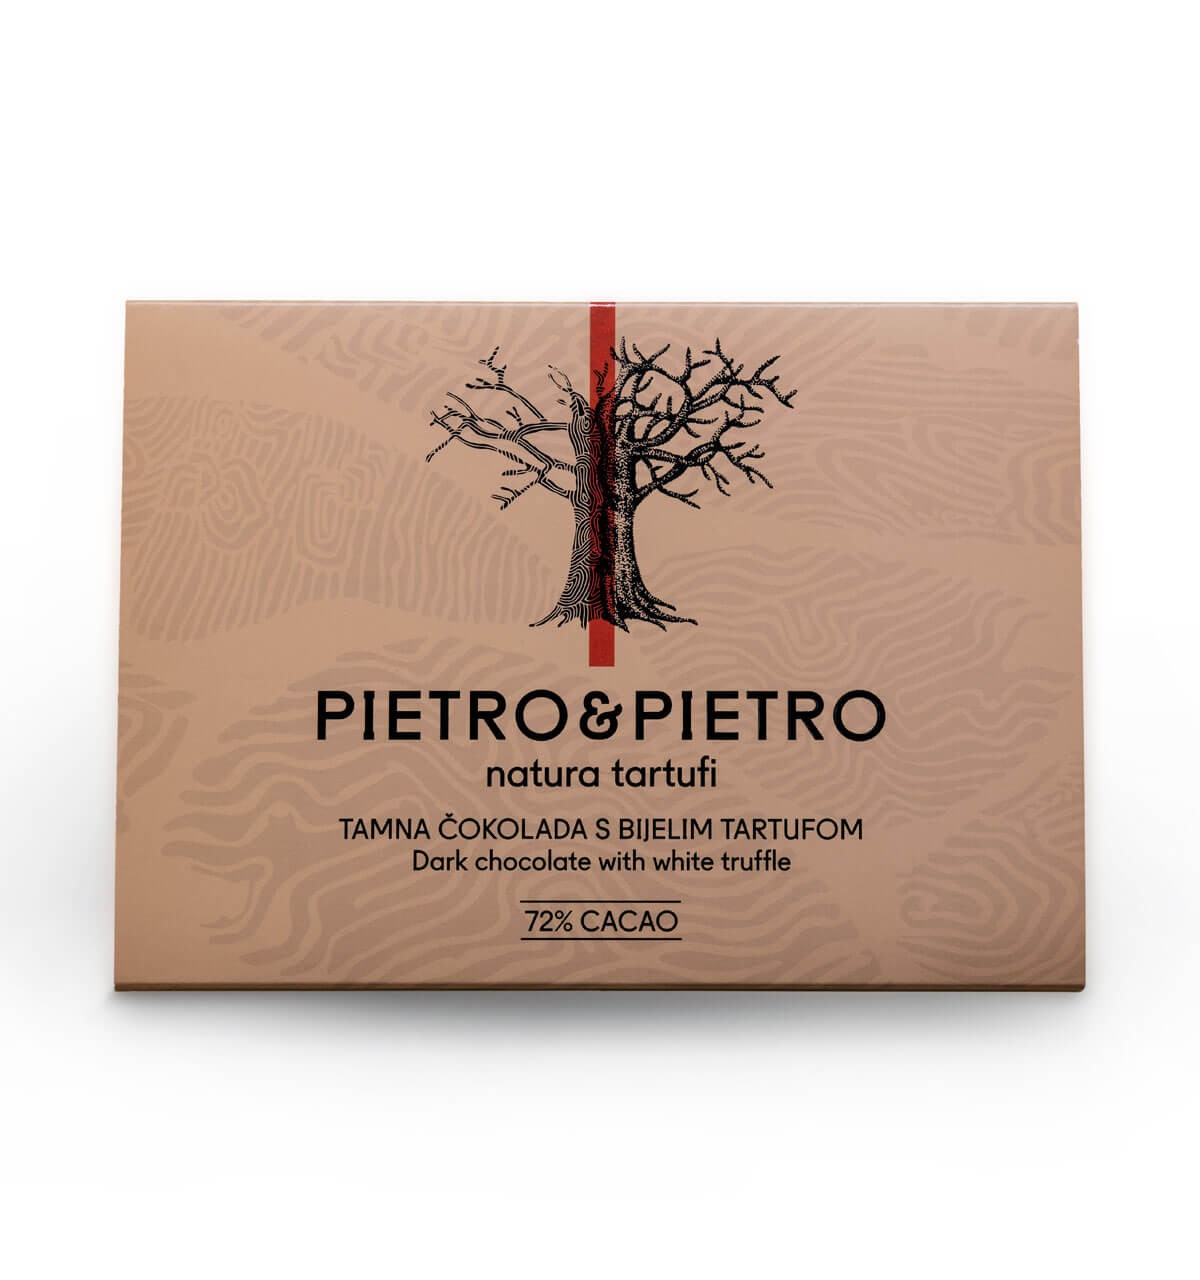 Cioccolato al tartufo bianco, Pietro & Pietro by Natura Tartufi
